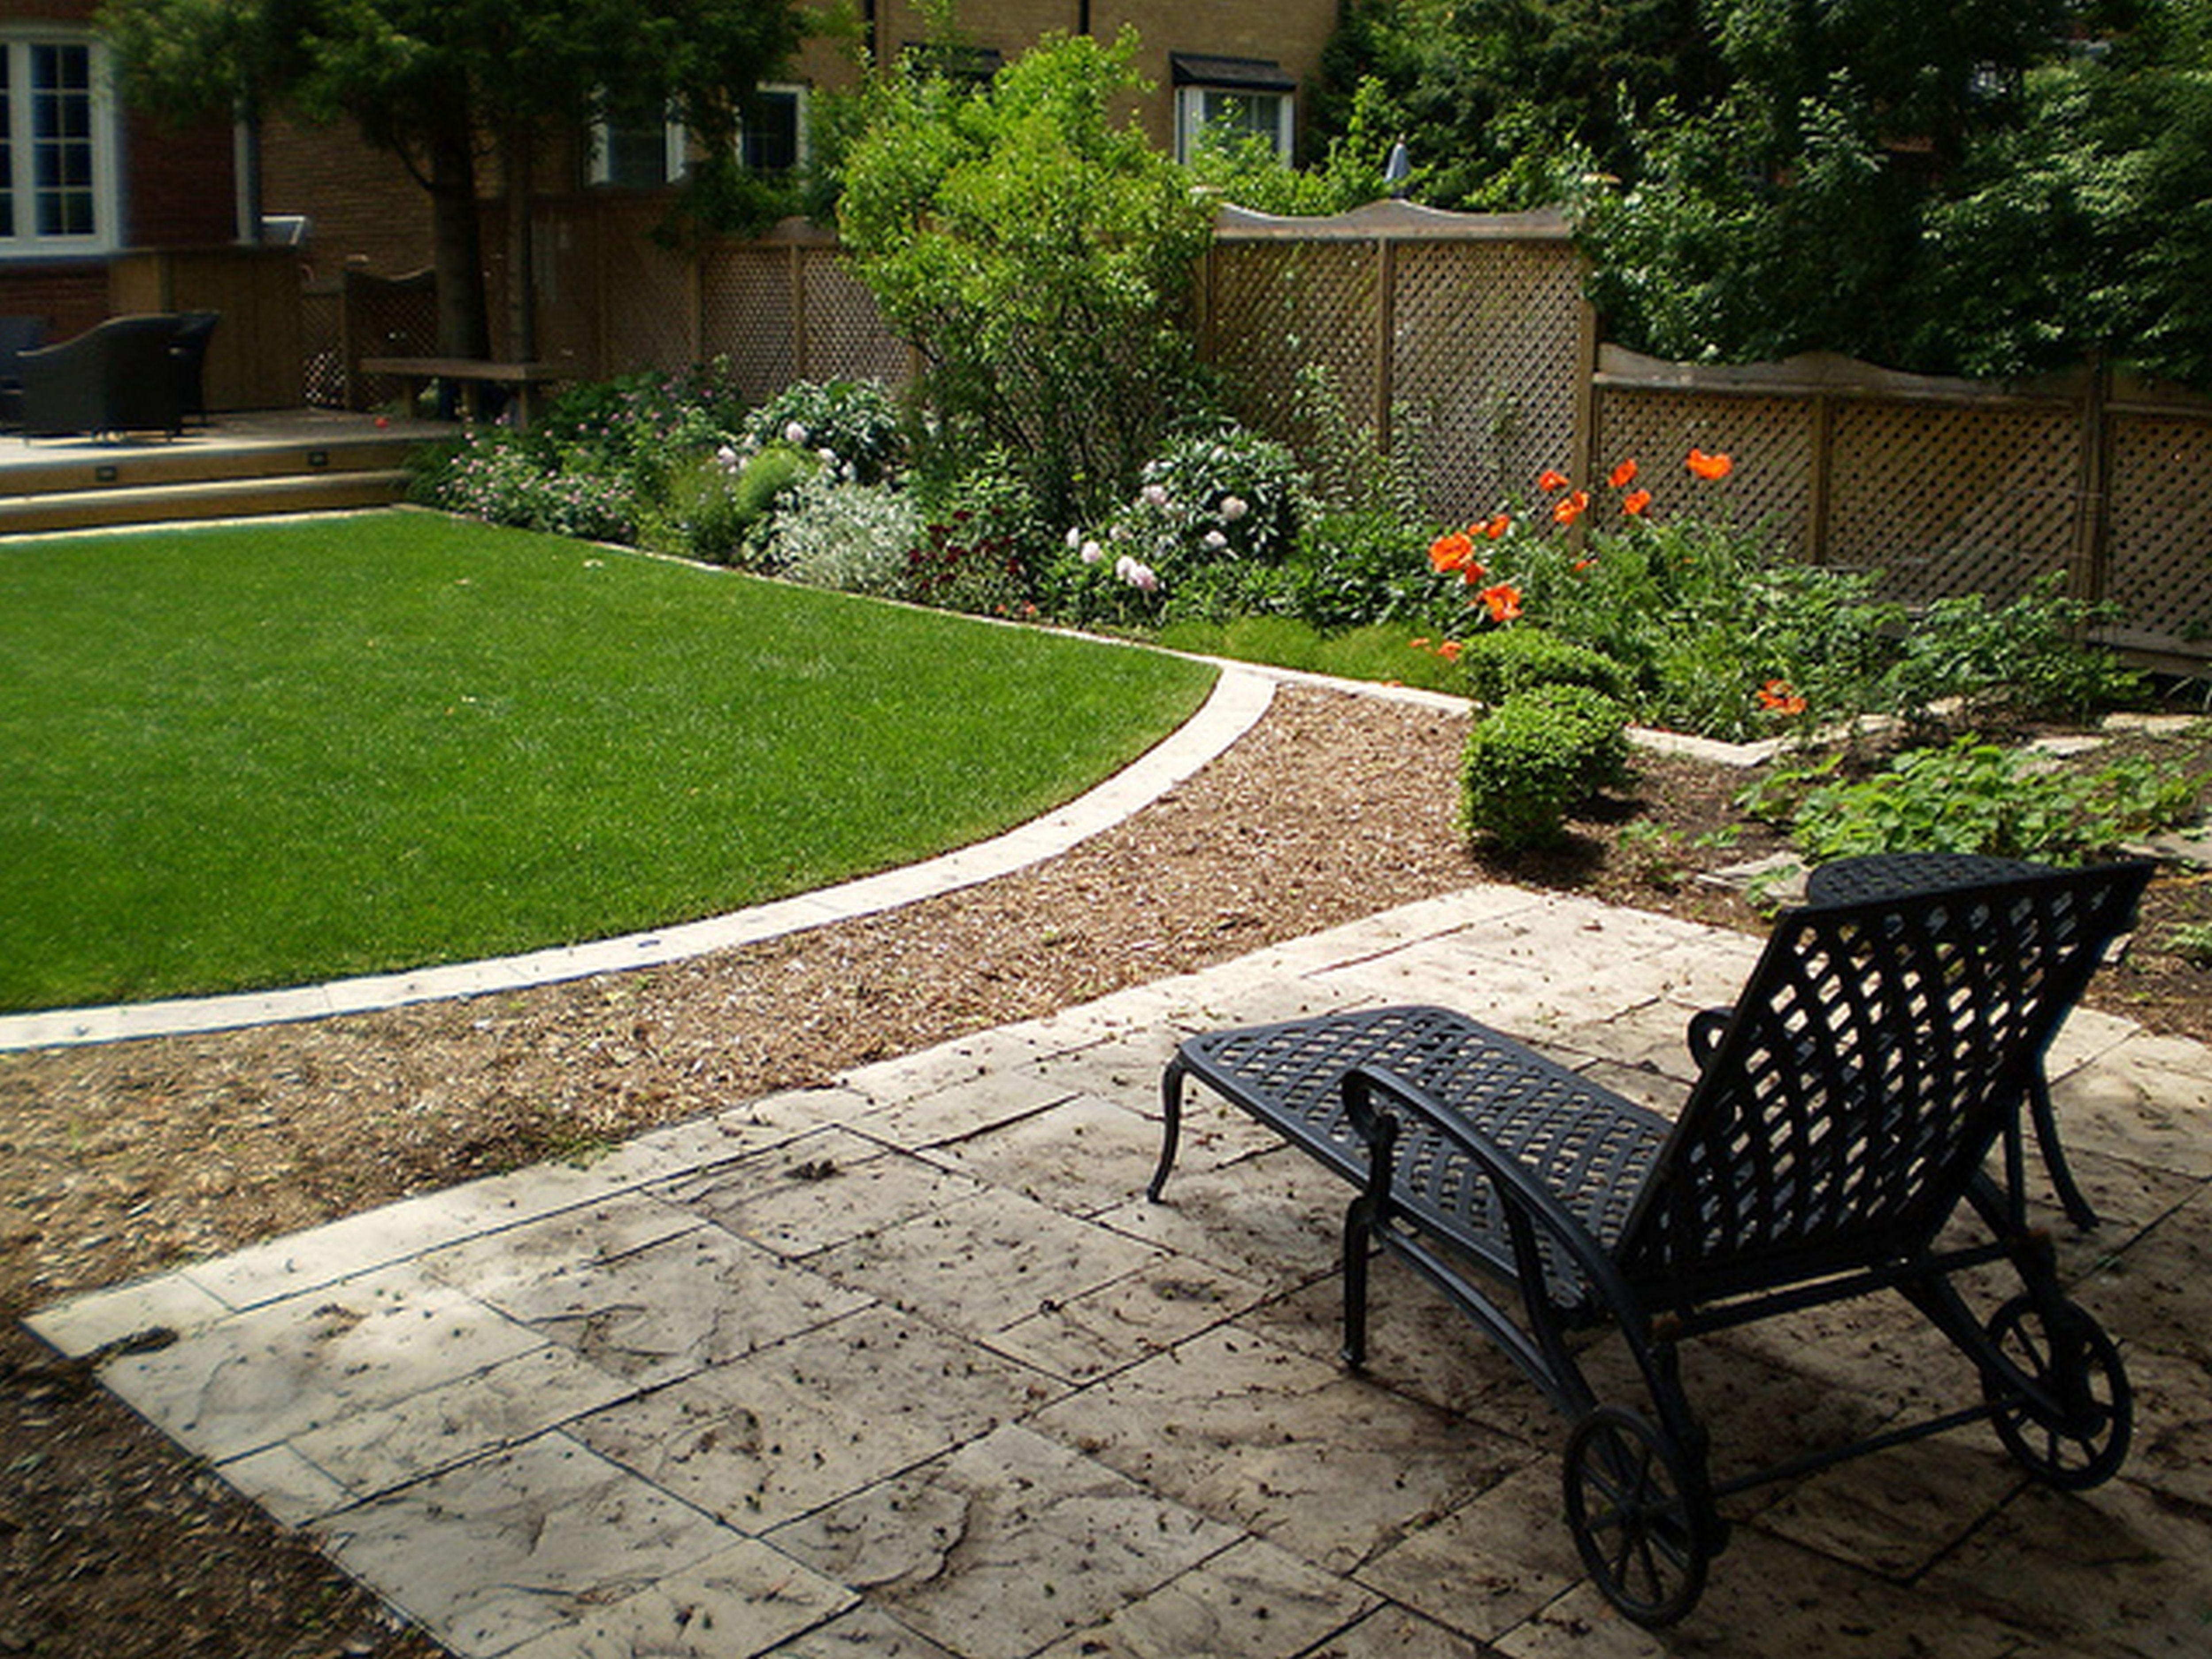  landscaping design ideas for backyard